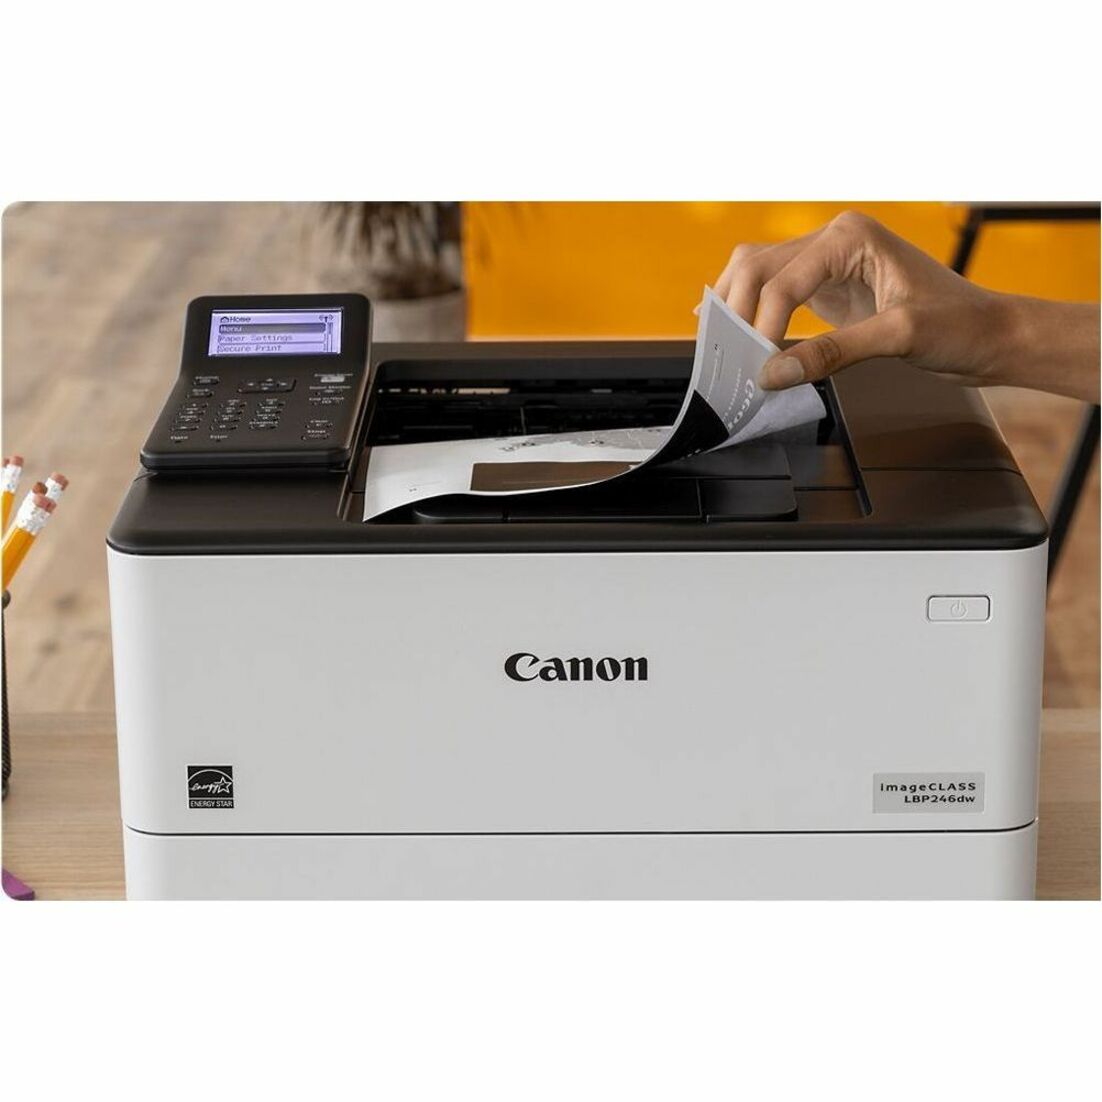 Canon 5952C005 imageCLASS LBP246dw Wireless Laser Printer, Monochrome, Duplex Printing